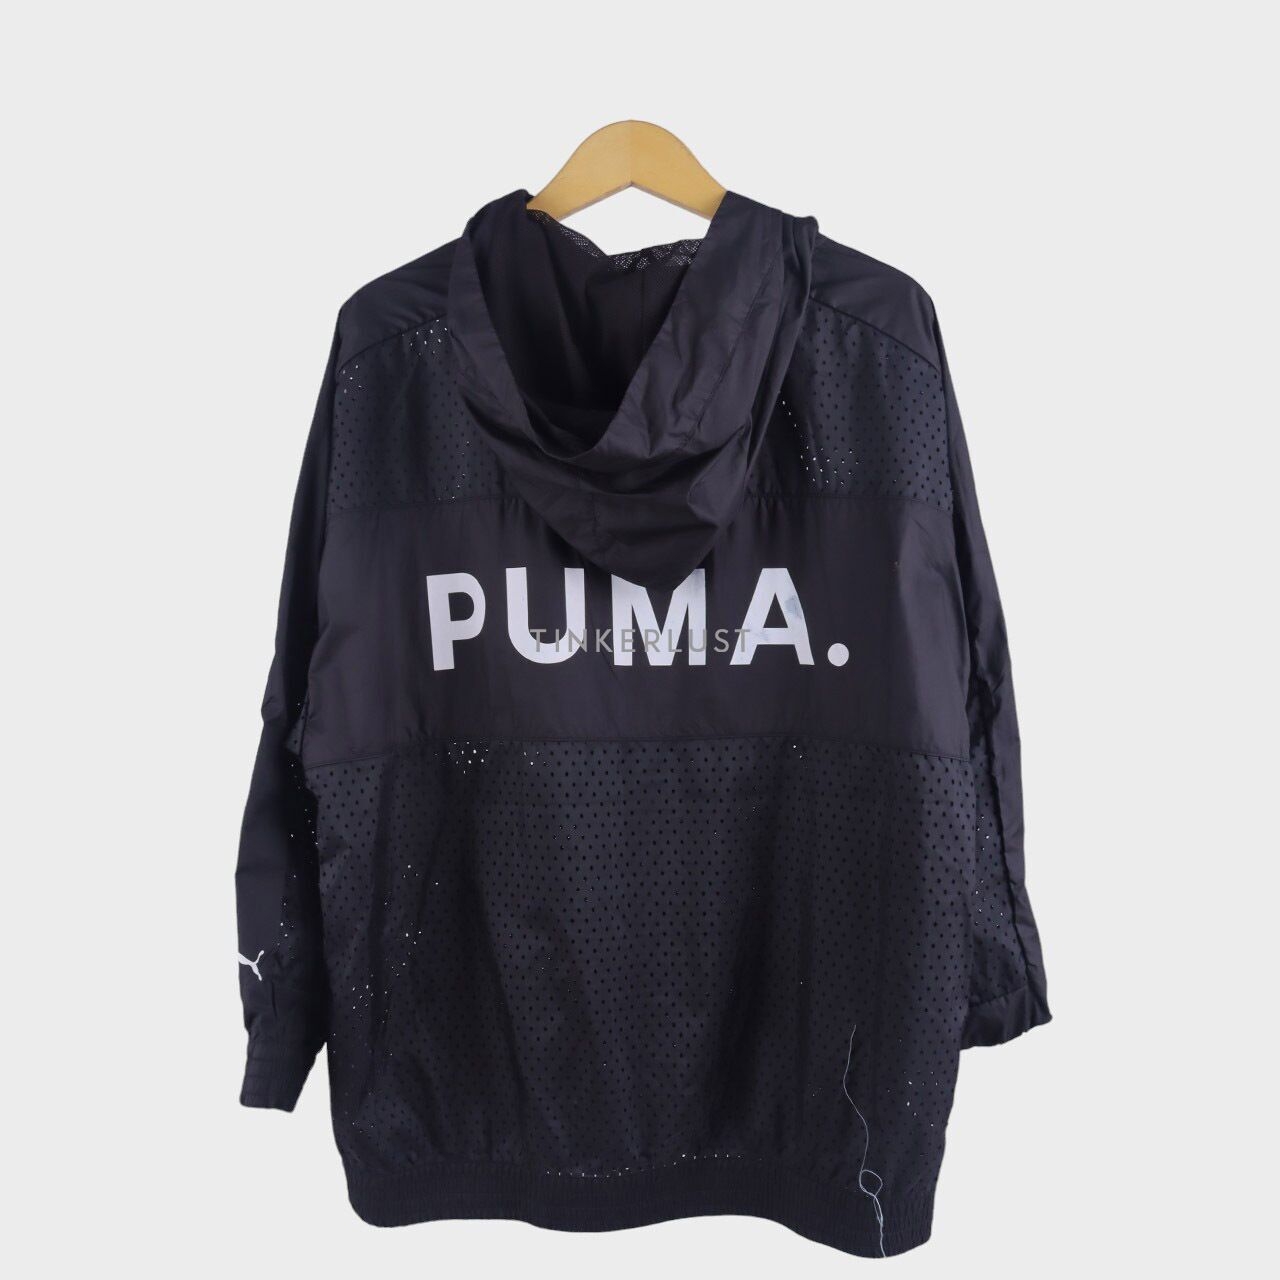 Puma Black Hoodie Jacket